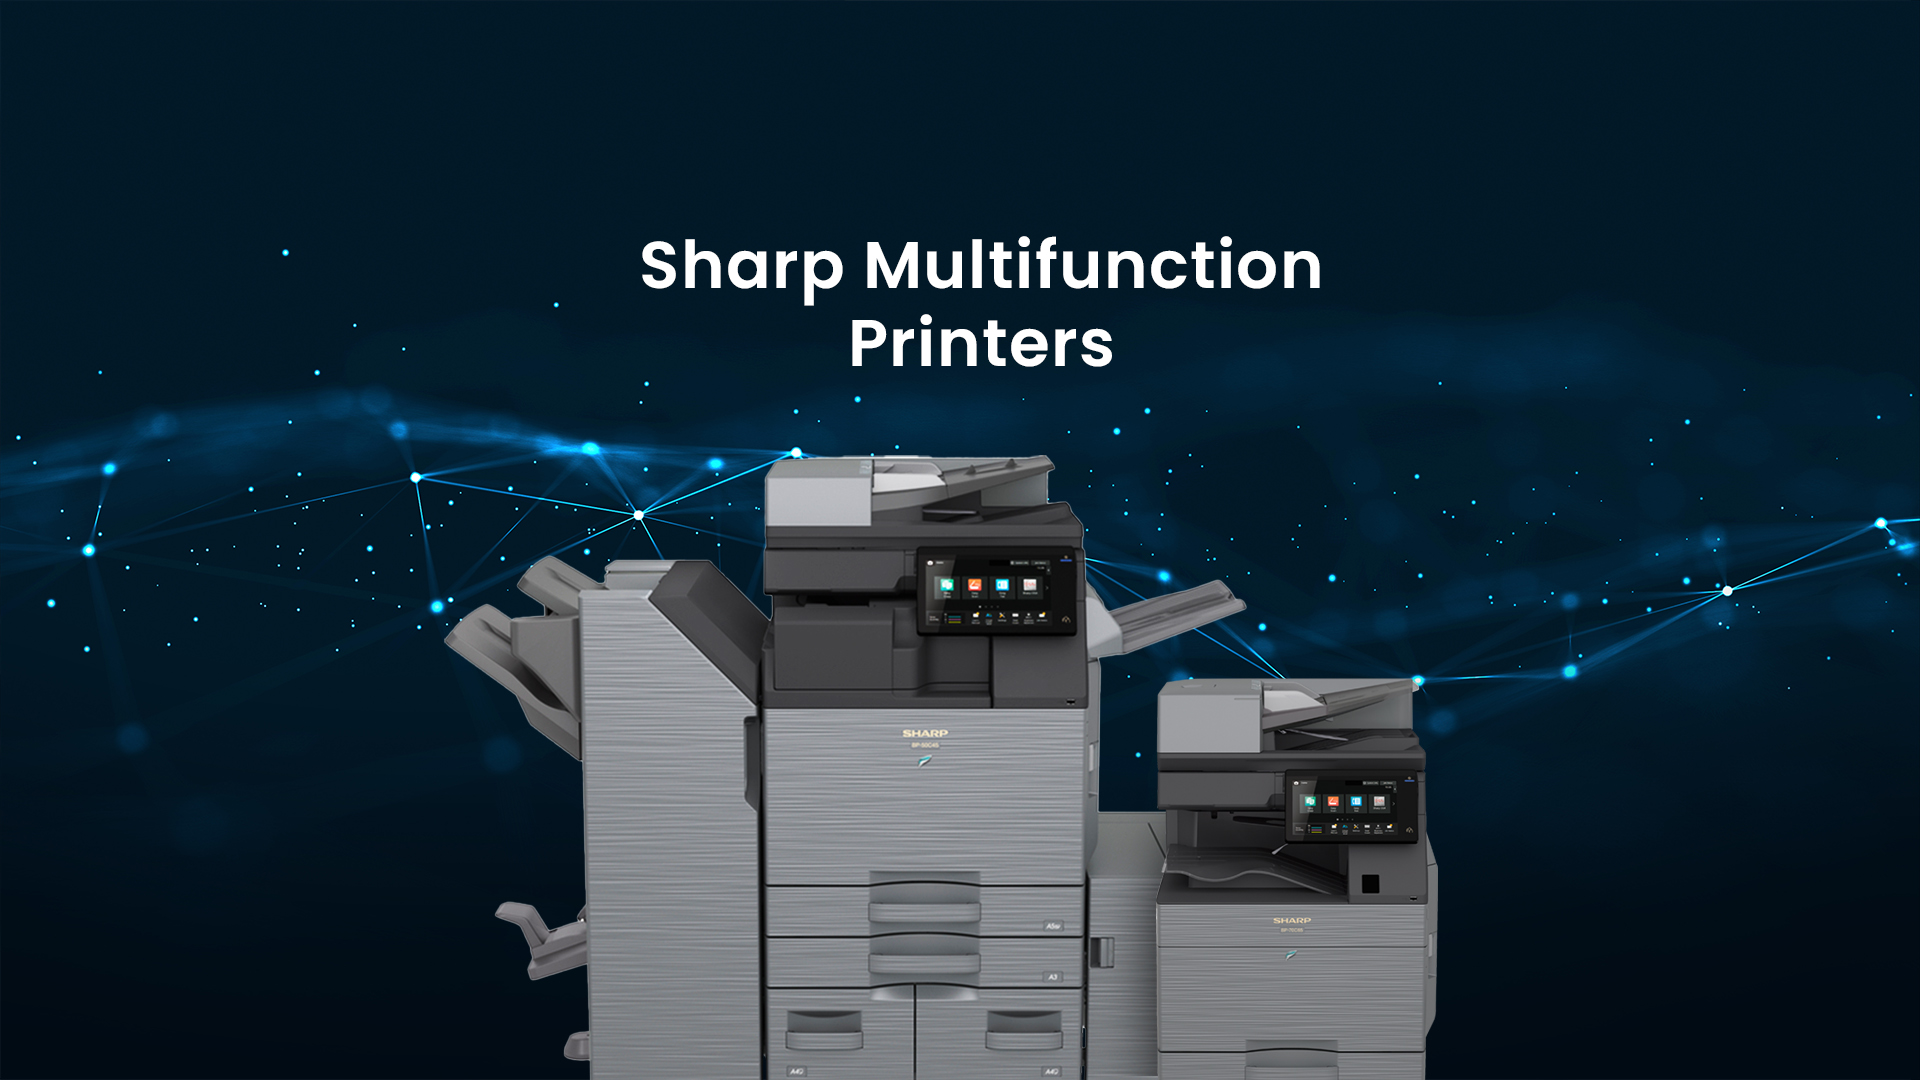 SHARP Multifunction Printers